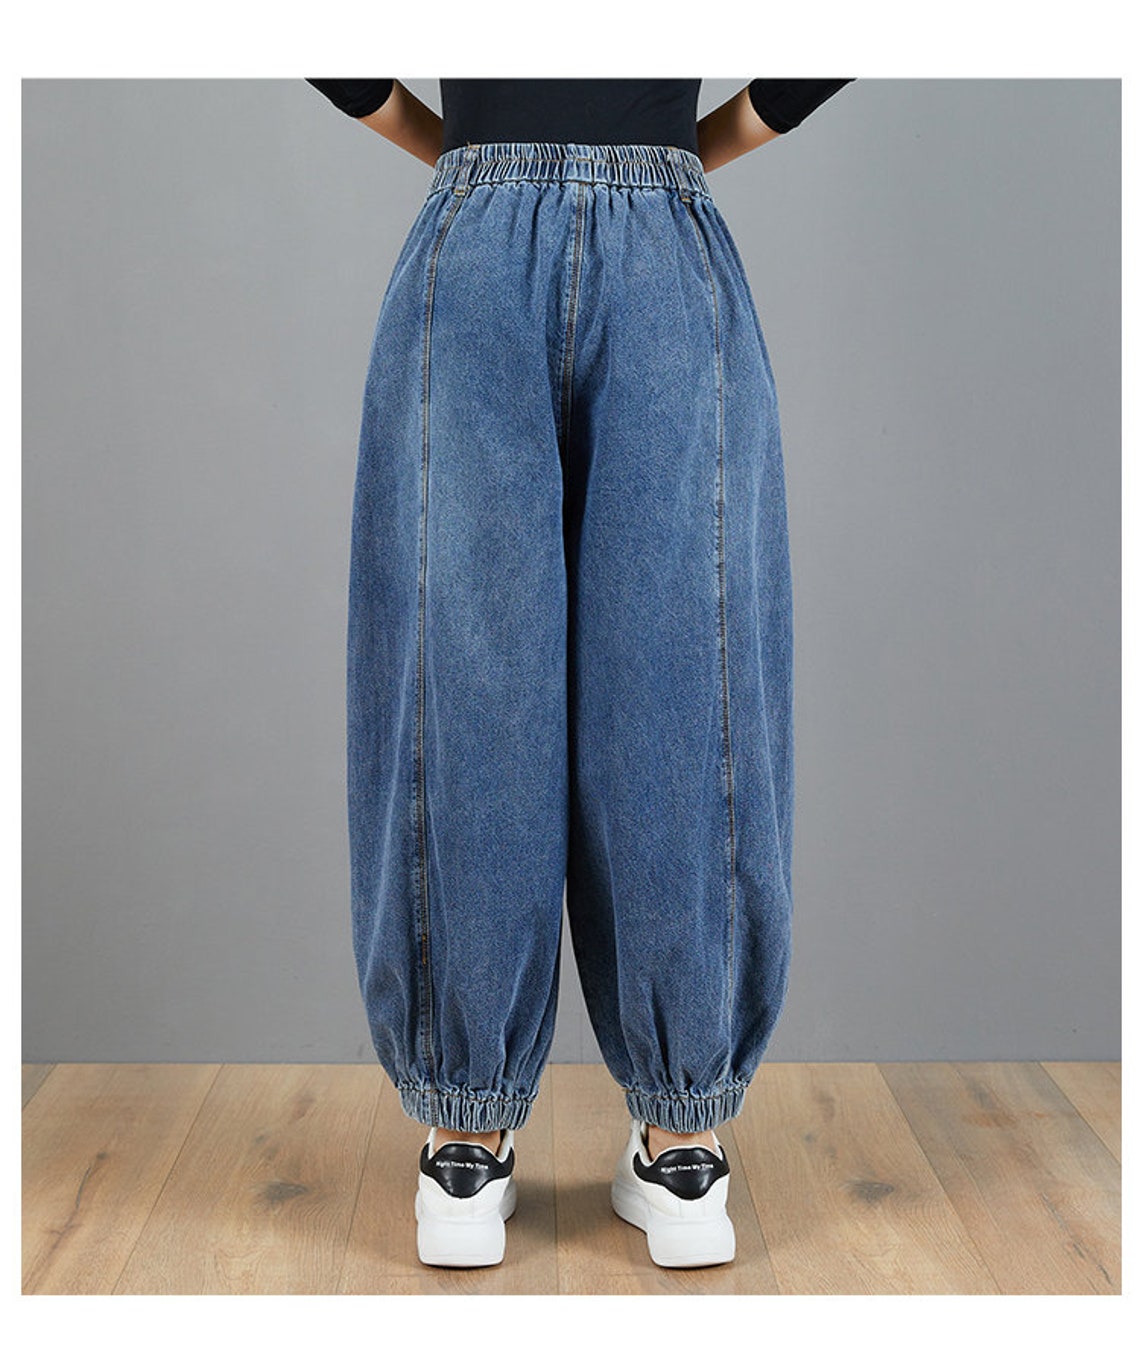 Fashion woman loose jeans oversize pants large size jeans | Etsy